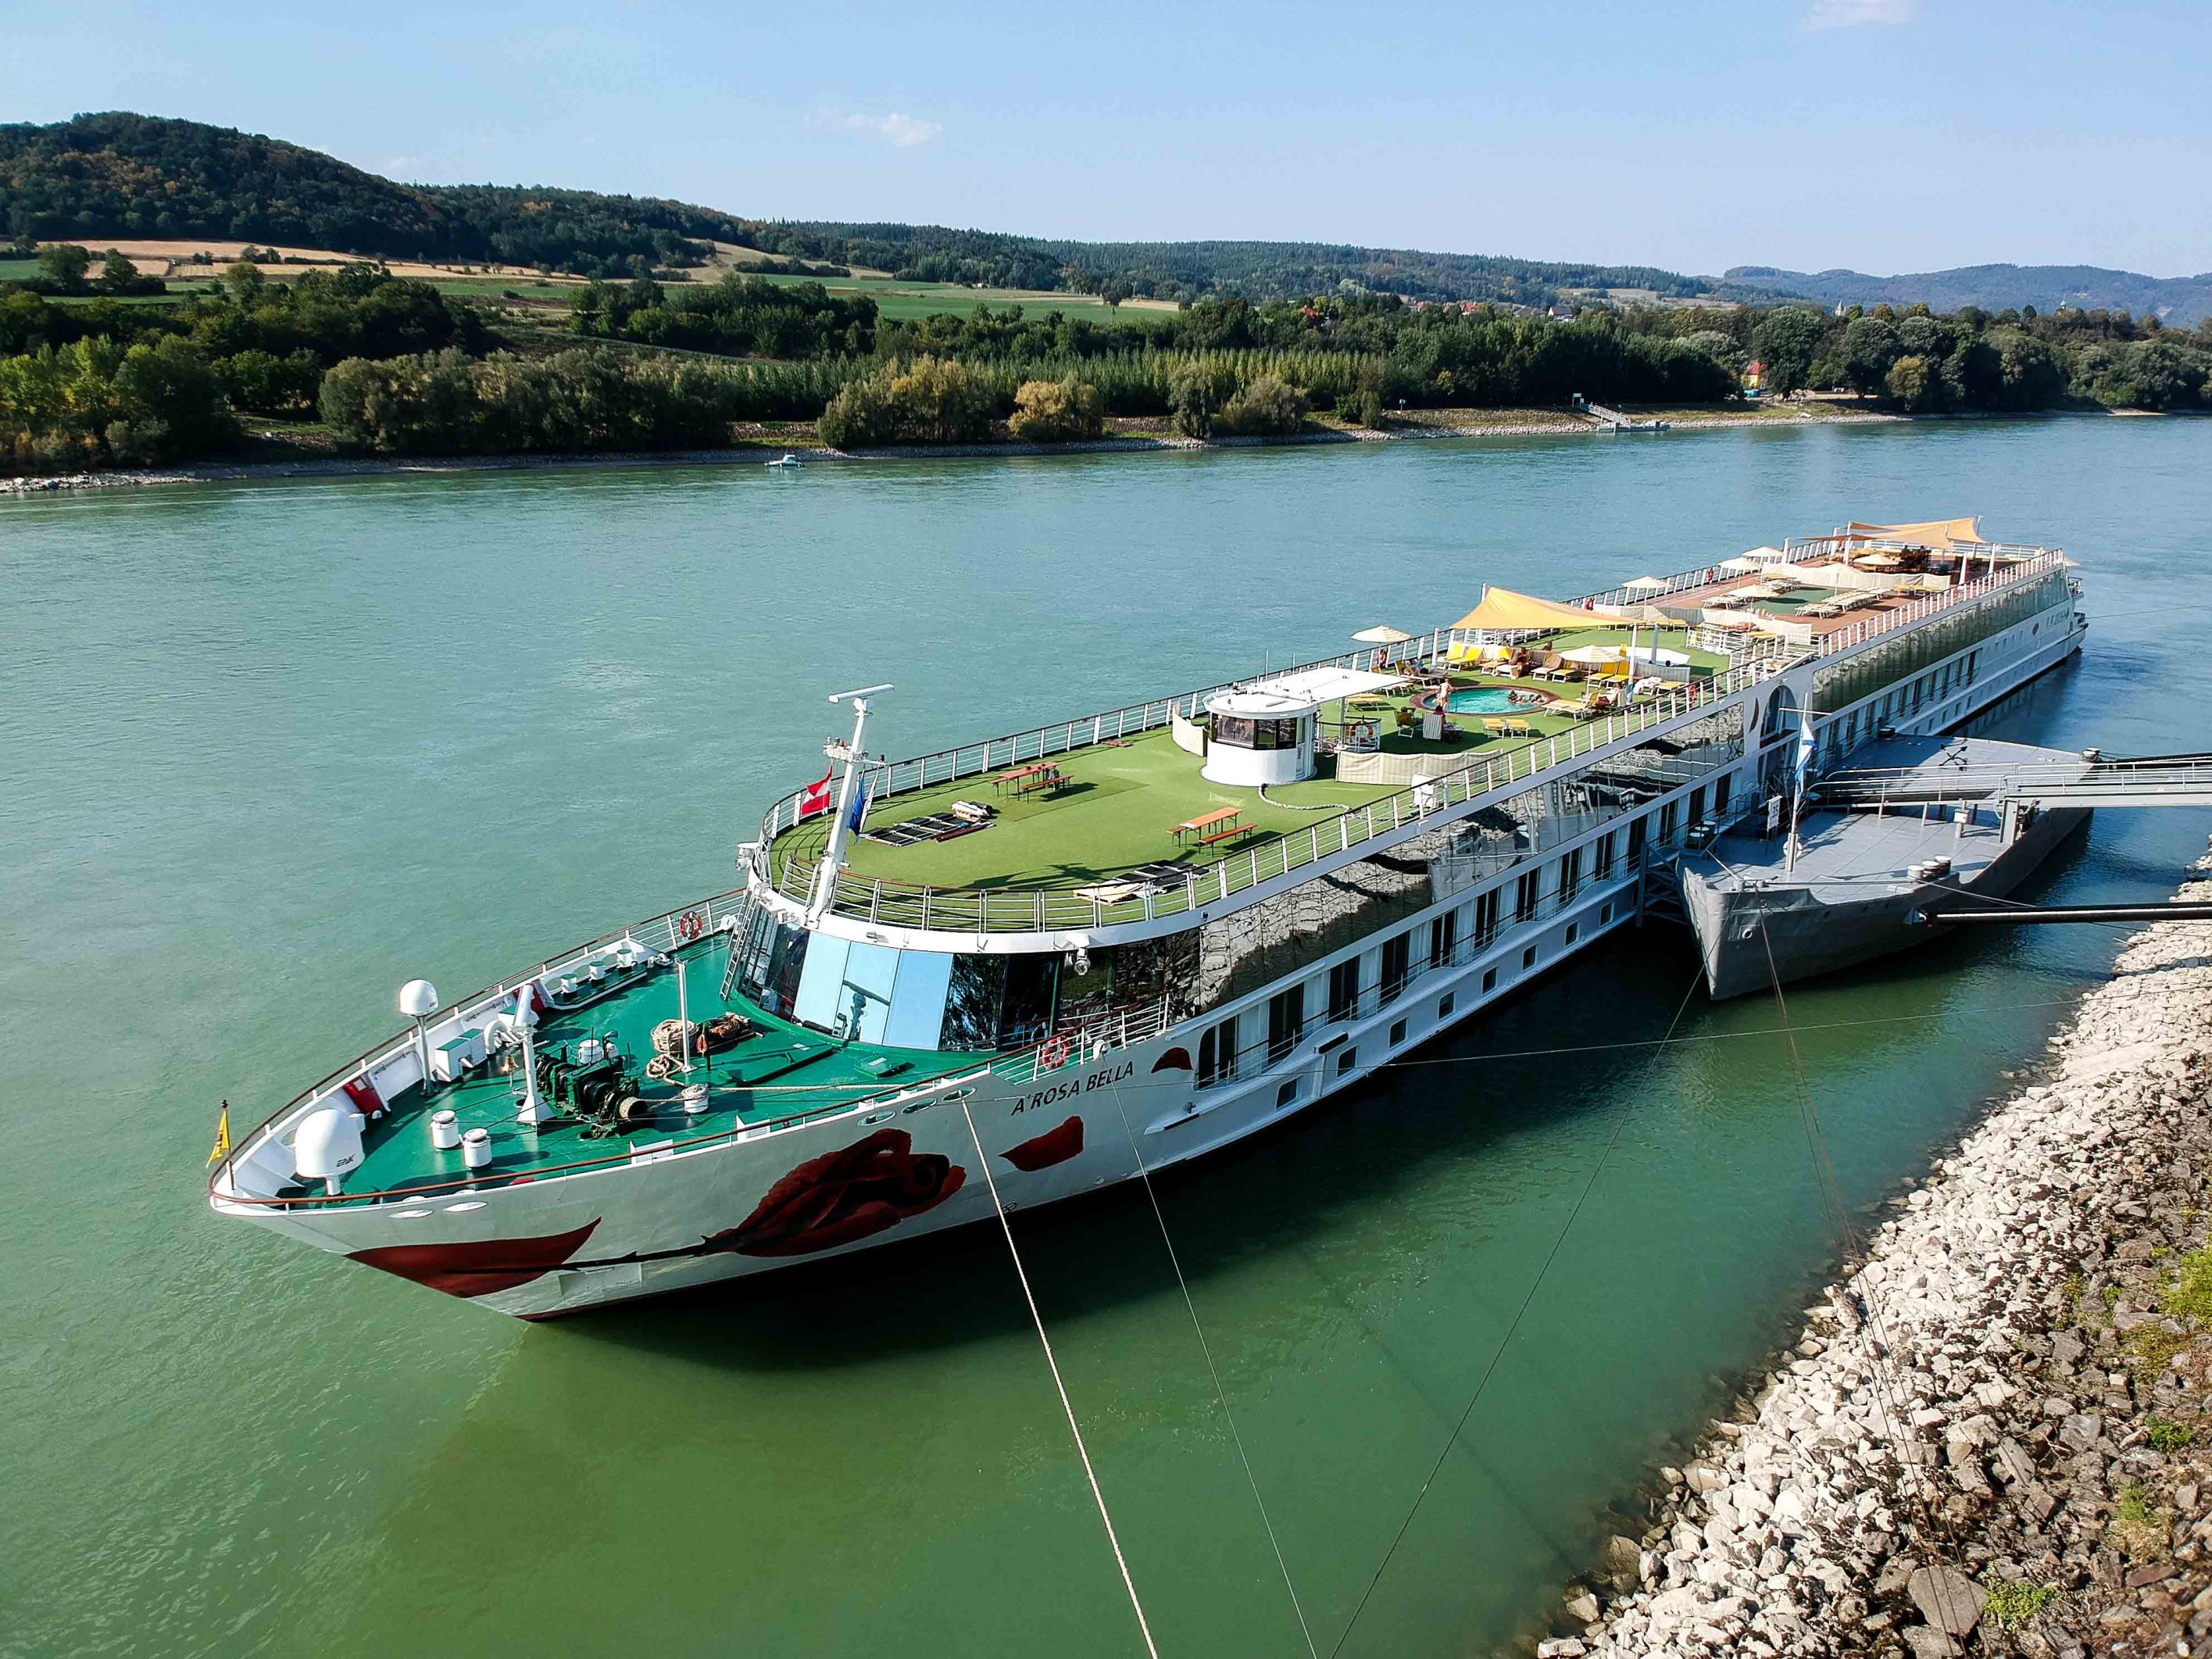 Donaukreuzfahrt-A-Rosa-Bella-Flusskreuzfahrtschiff-Donau-Arosa-Reiseblogger